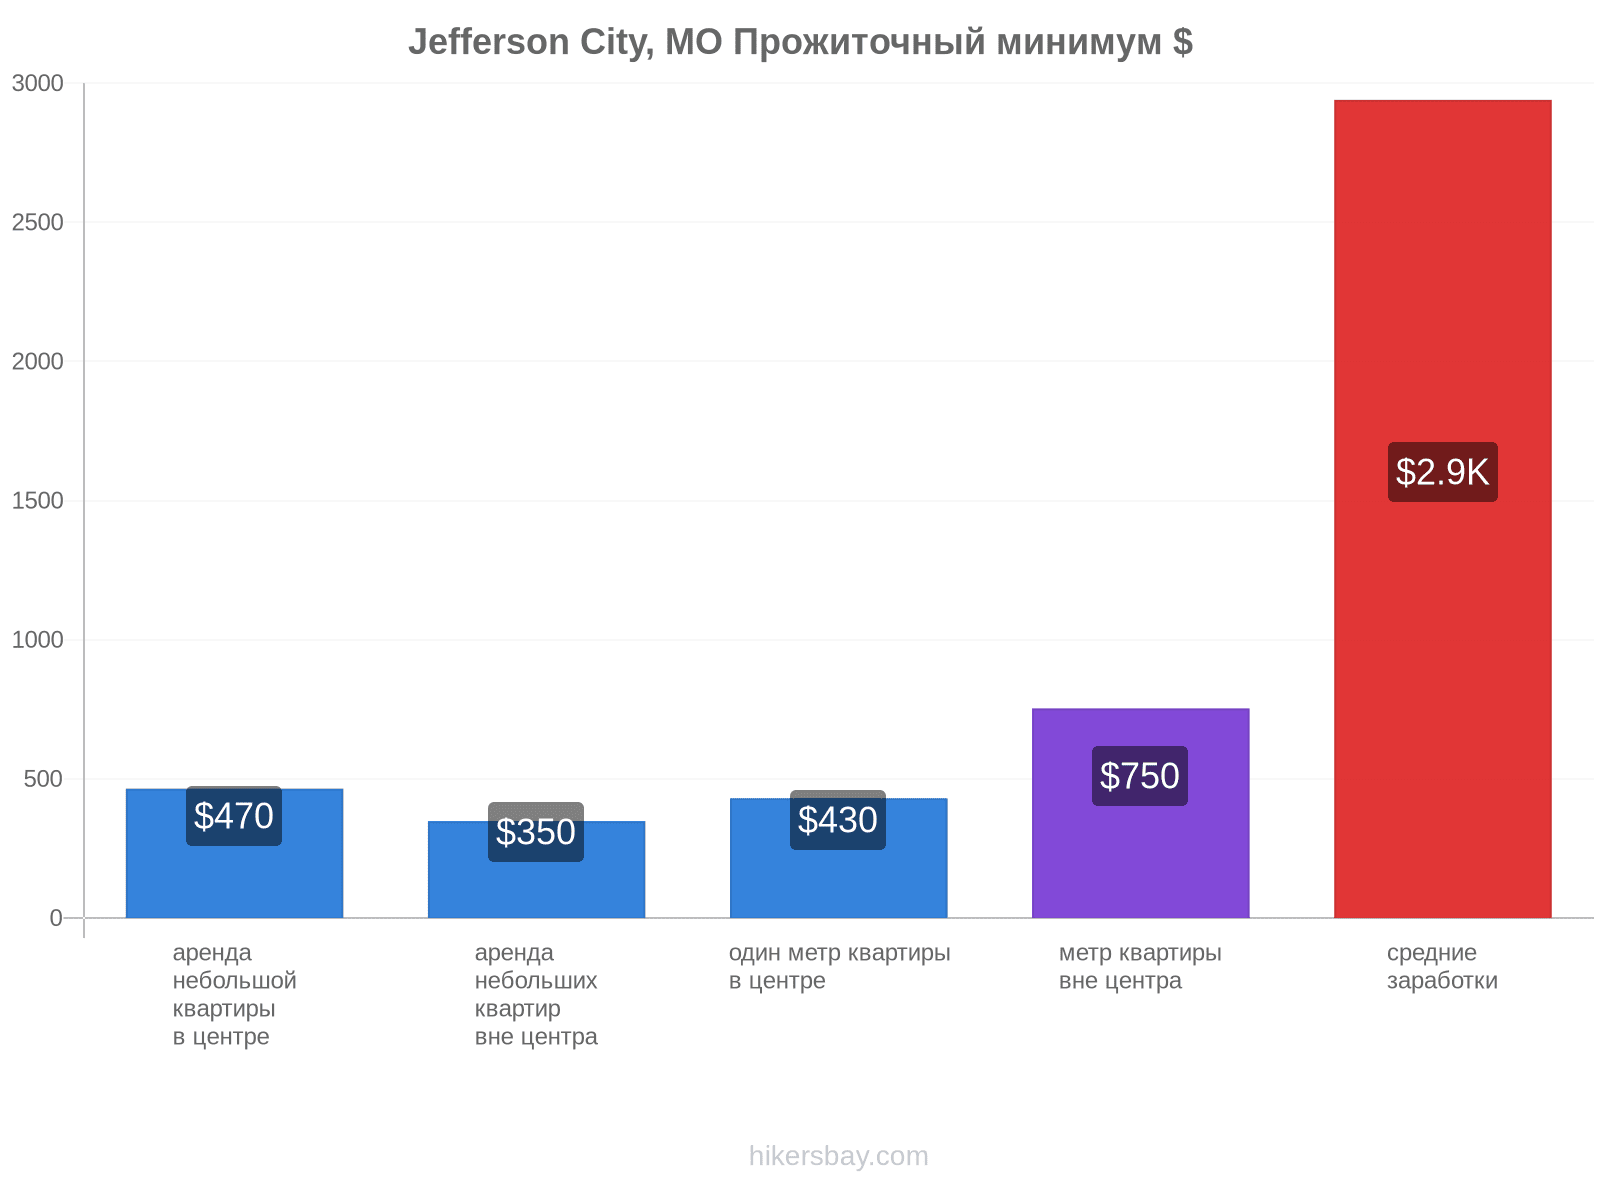 Jefferson City, MO стоимость жизни hikersbay.com